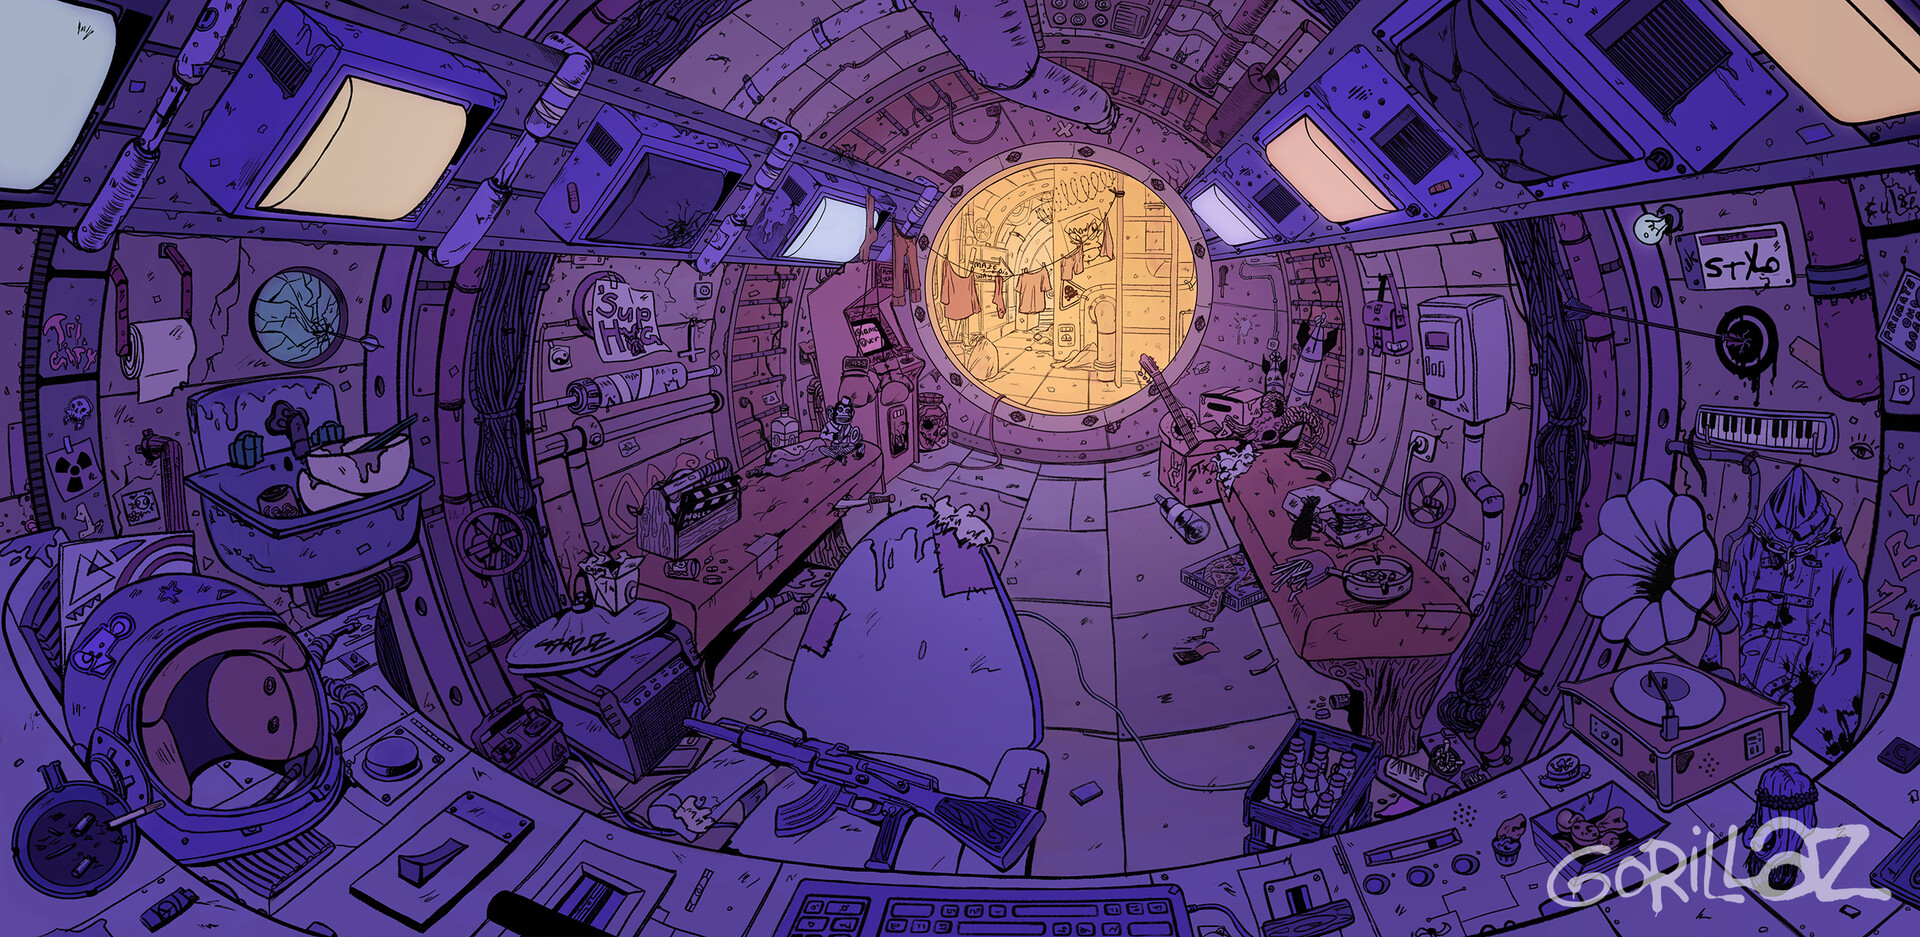 ArtStation - Inside space ship